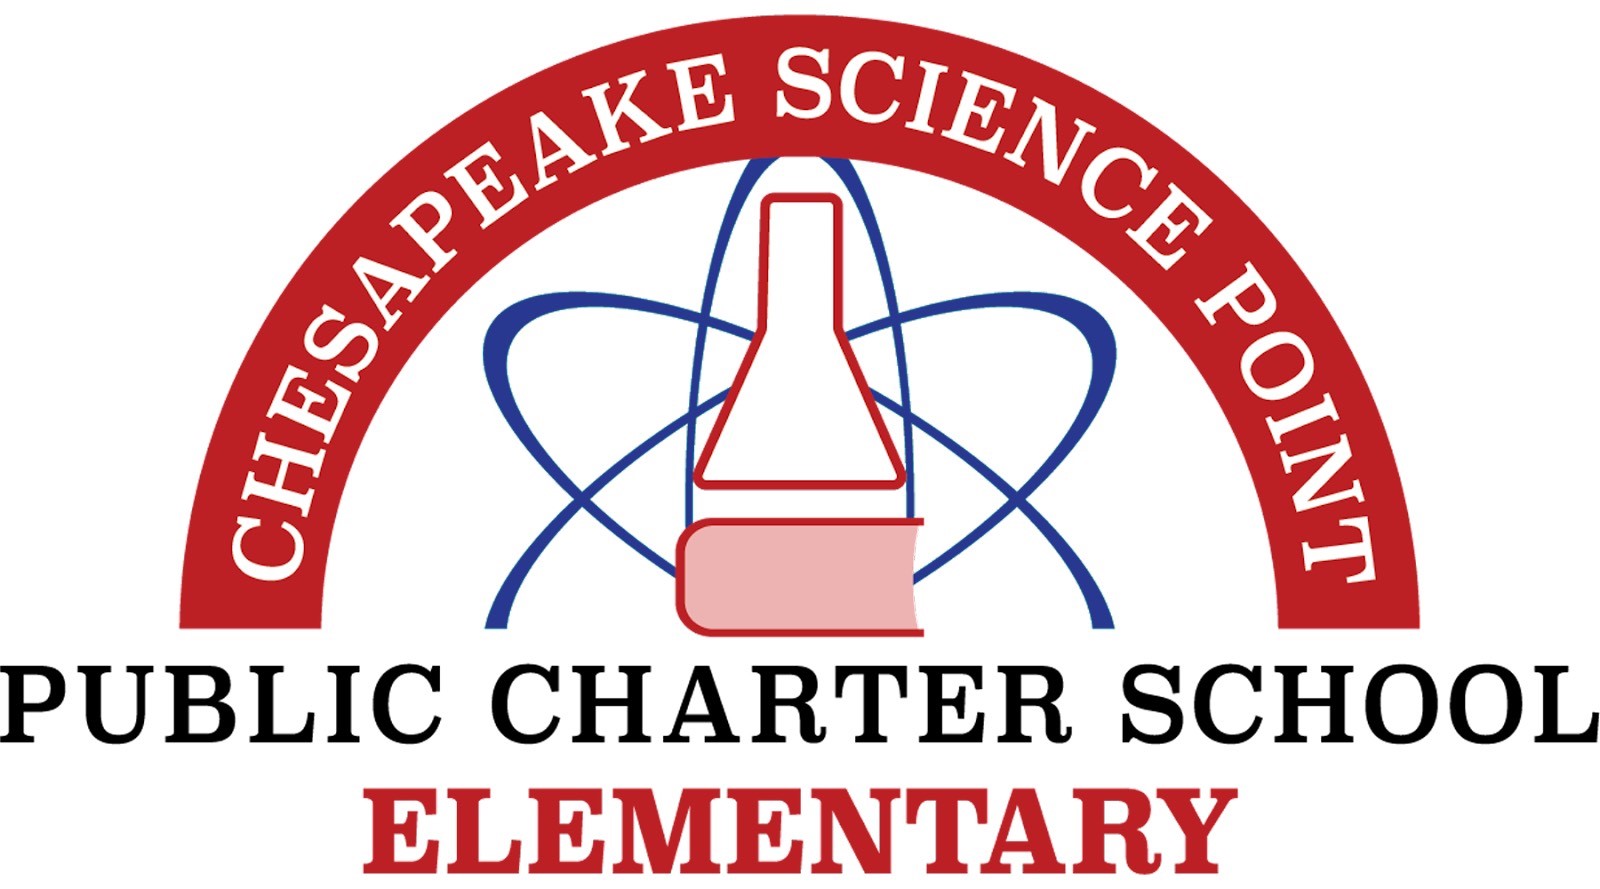 Chesapeake Science Point Elementary School logo